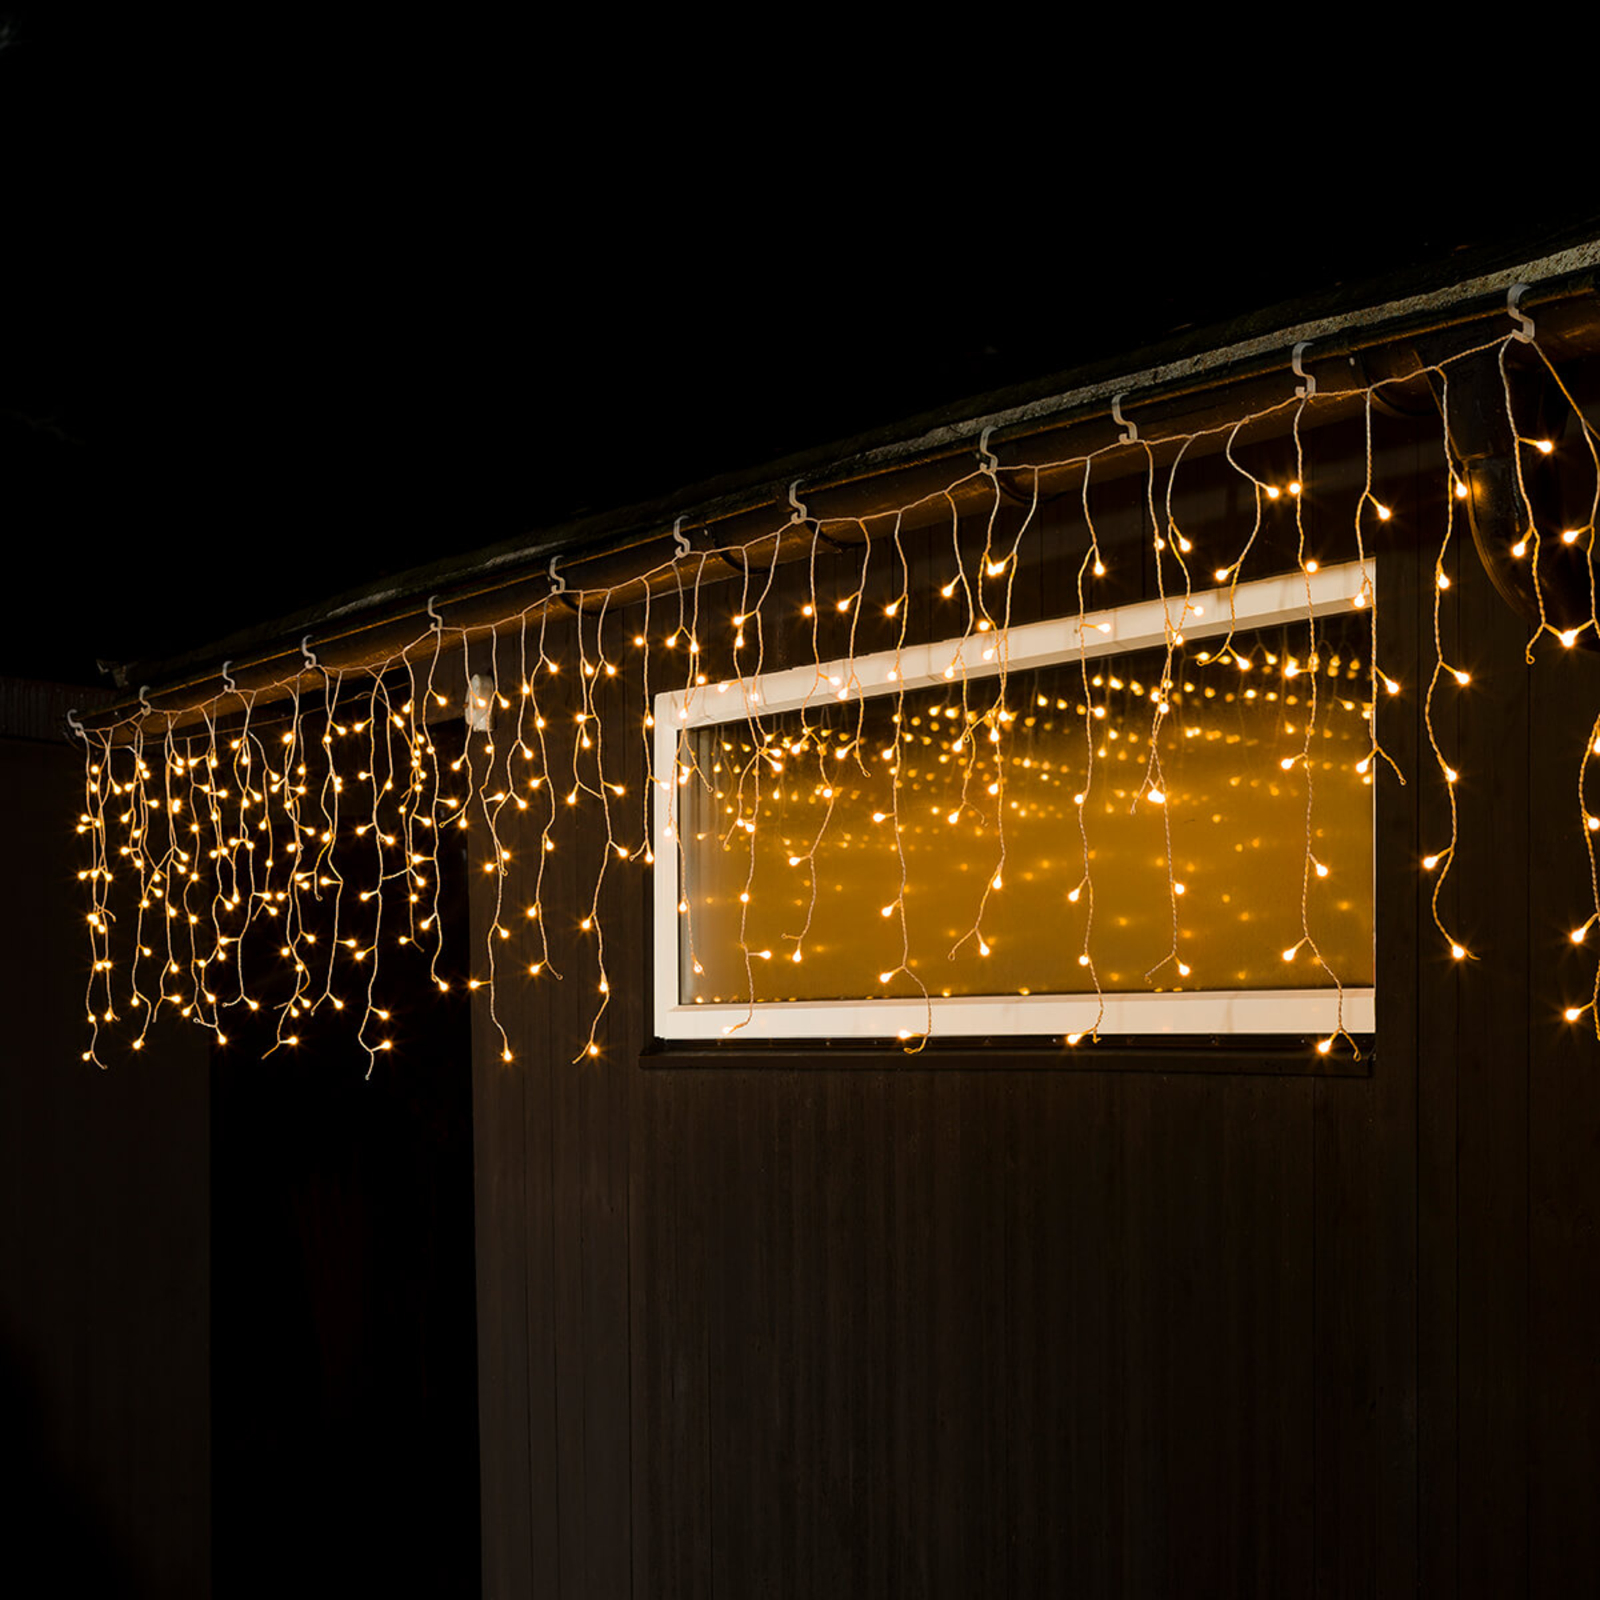 Kurtyna świetlna LED ice rain amber transp. 5m